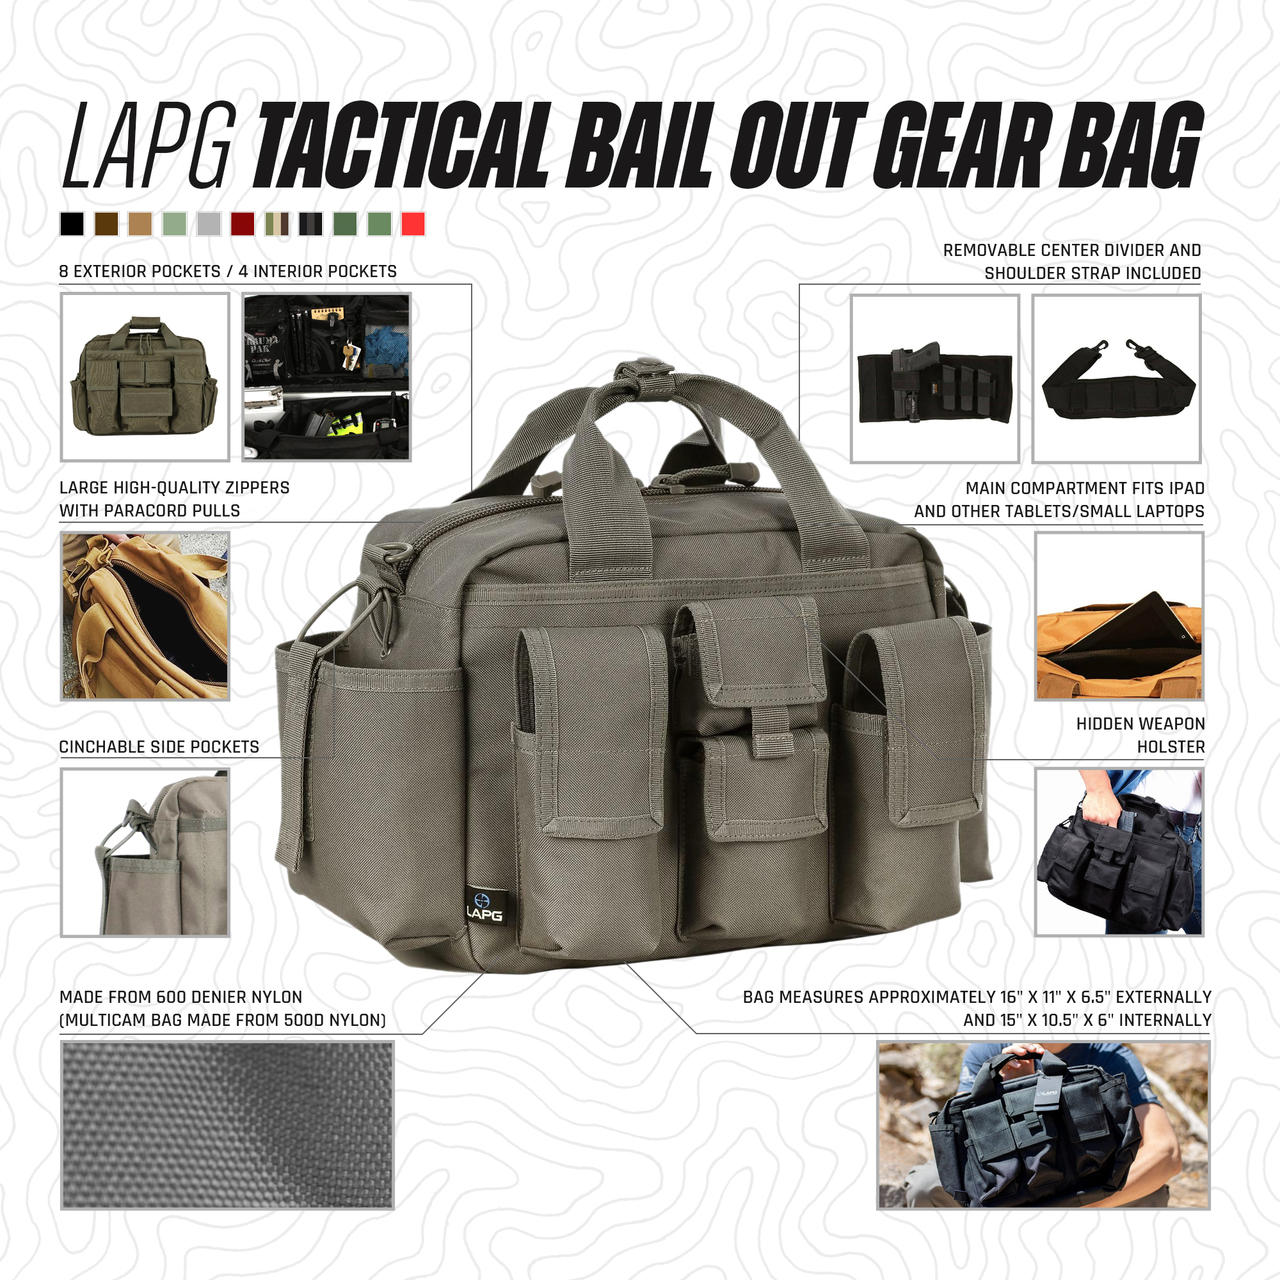 https://cdn11.bigcommerce.com/s-q9ptxvukwz/images/stencil/original/products/14866/275626/la-police-gear-tactical-bail-out-gear-bag-best-seller-bailoutbag__89198.1649430017.jpg?c=2